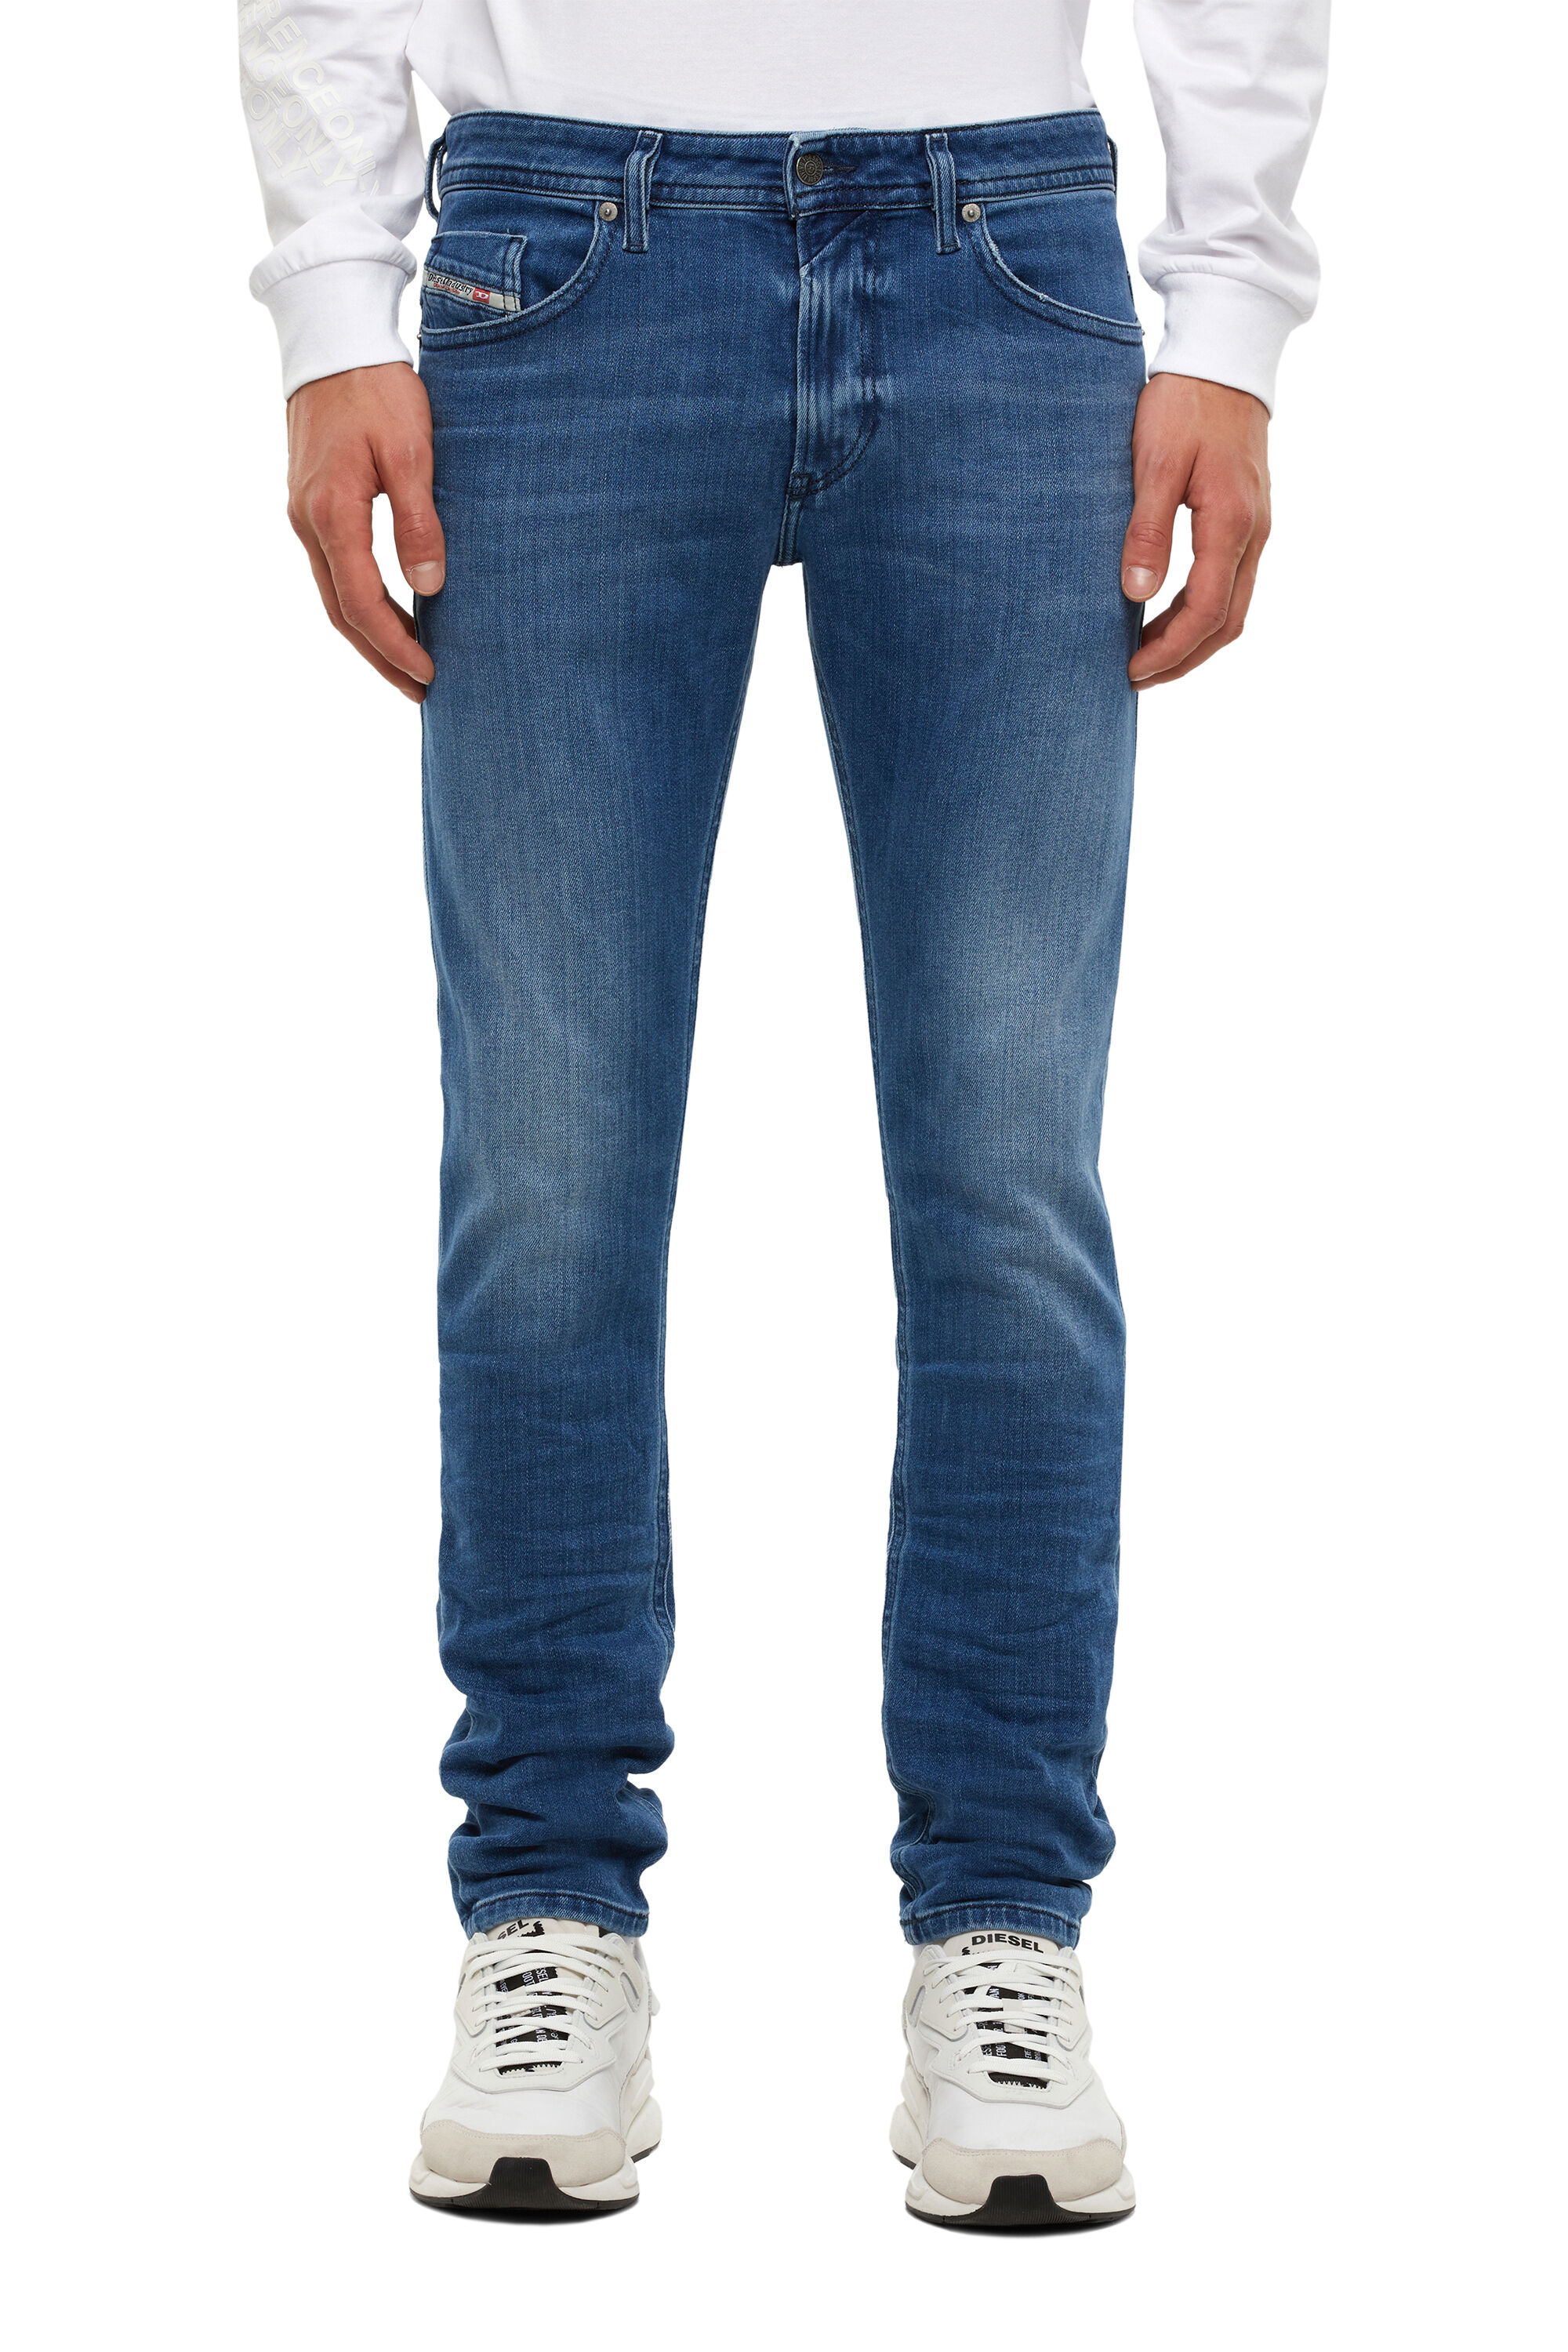 Thommer Slim Jeans 009MB: Medium Blue Wash, Treated, Stretch Fabric